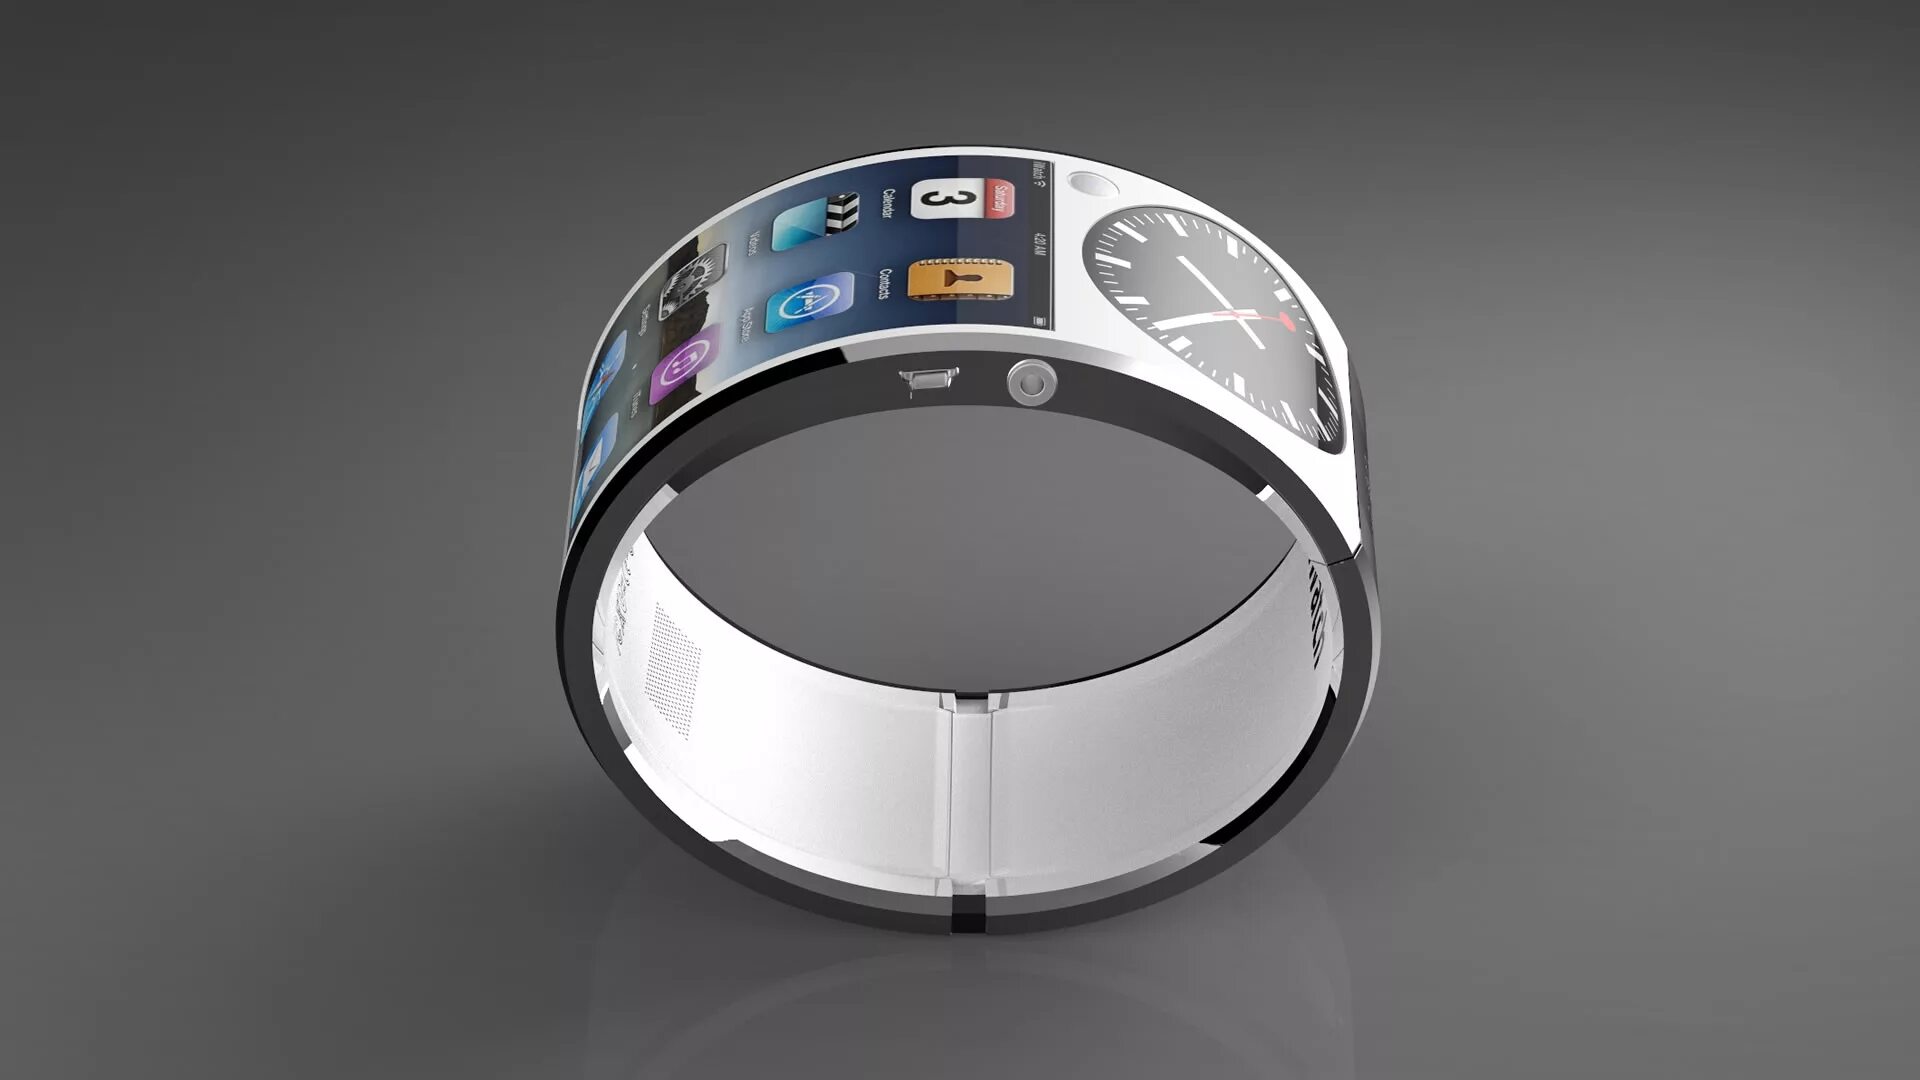 Apple IWATCH концепт. Apple IWATCH 7 концепт. Смарт часы самсунг с изогнутым экраном. Гаджеты Эппл гибкий браслет. Часы кольца браслеты